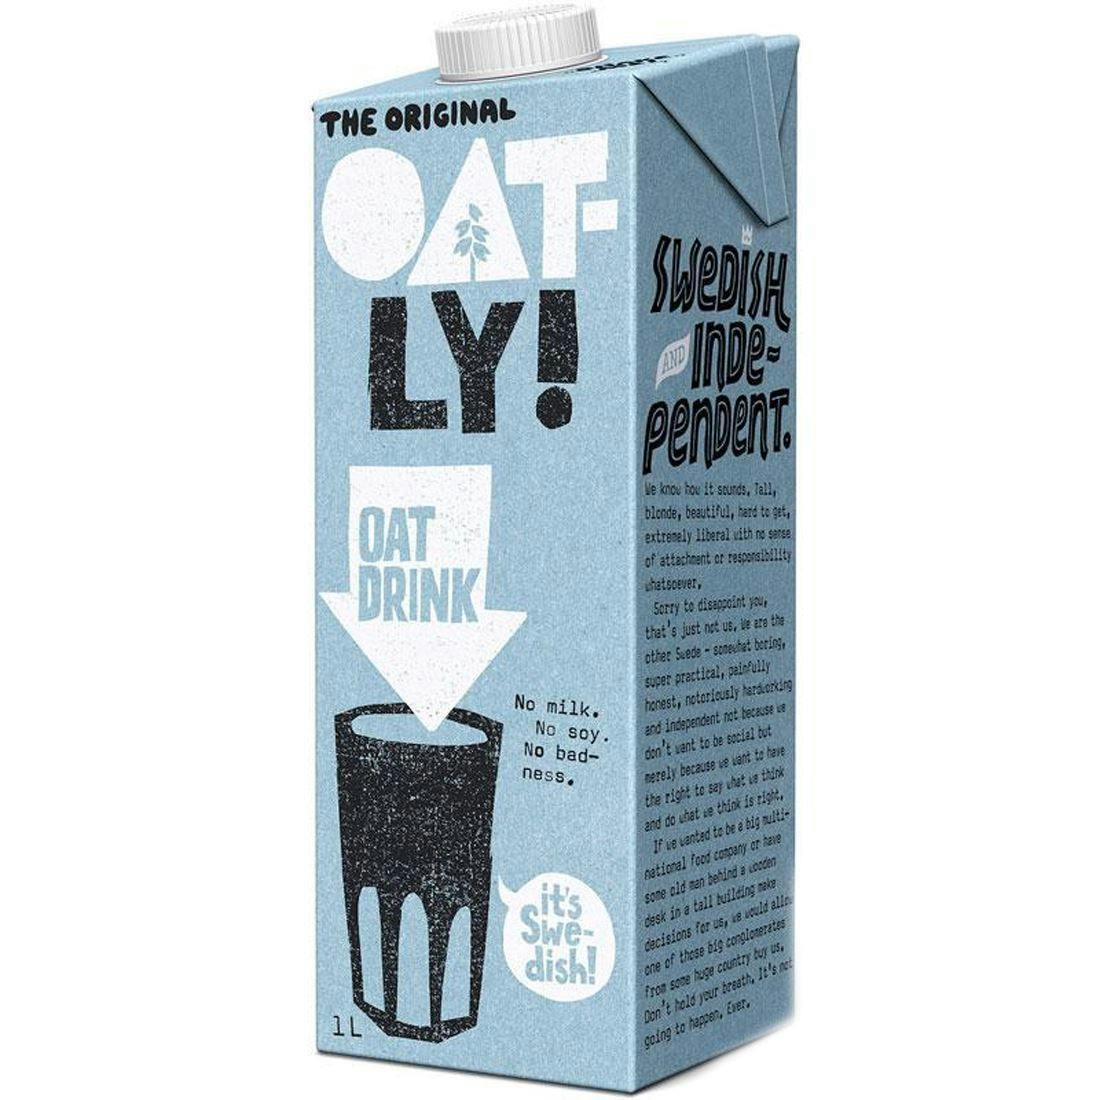 oat milk